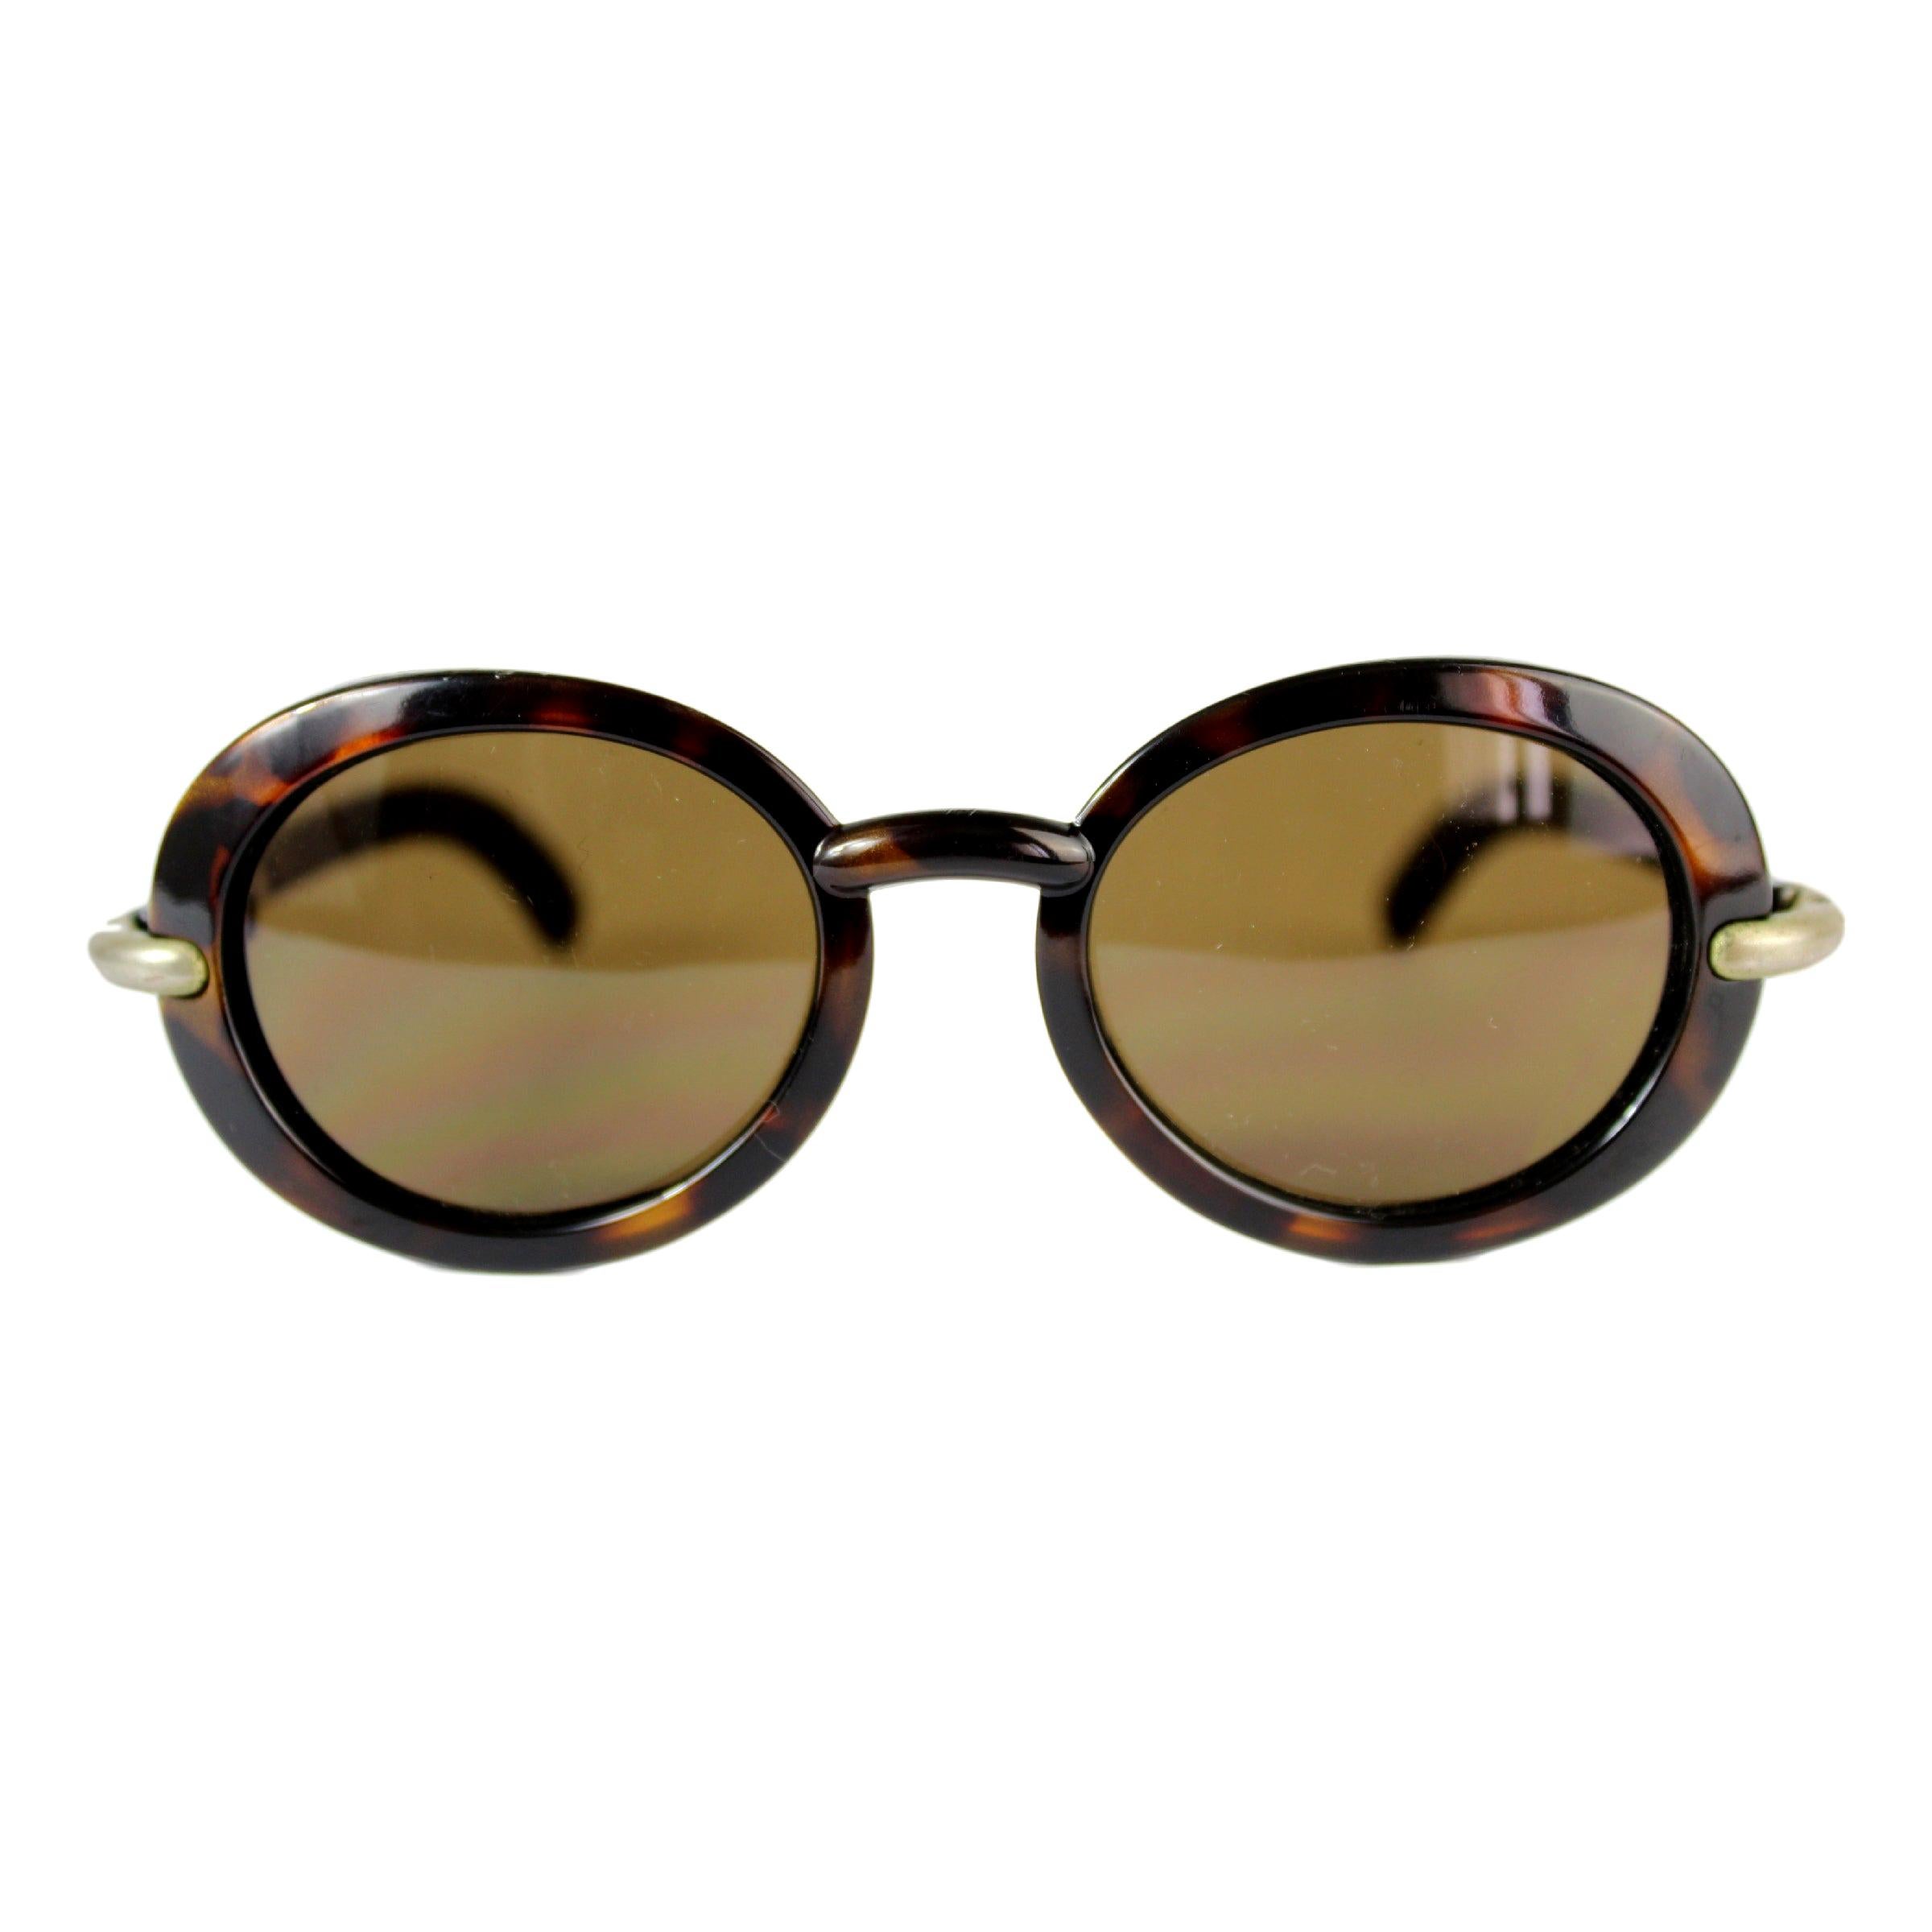 Karl Lagerfeld Brown Tortoise Round Lenses PC Cridalon Sunglasses 1990s